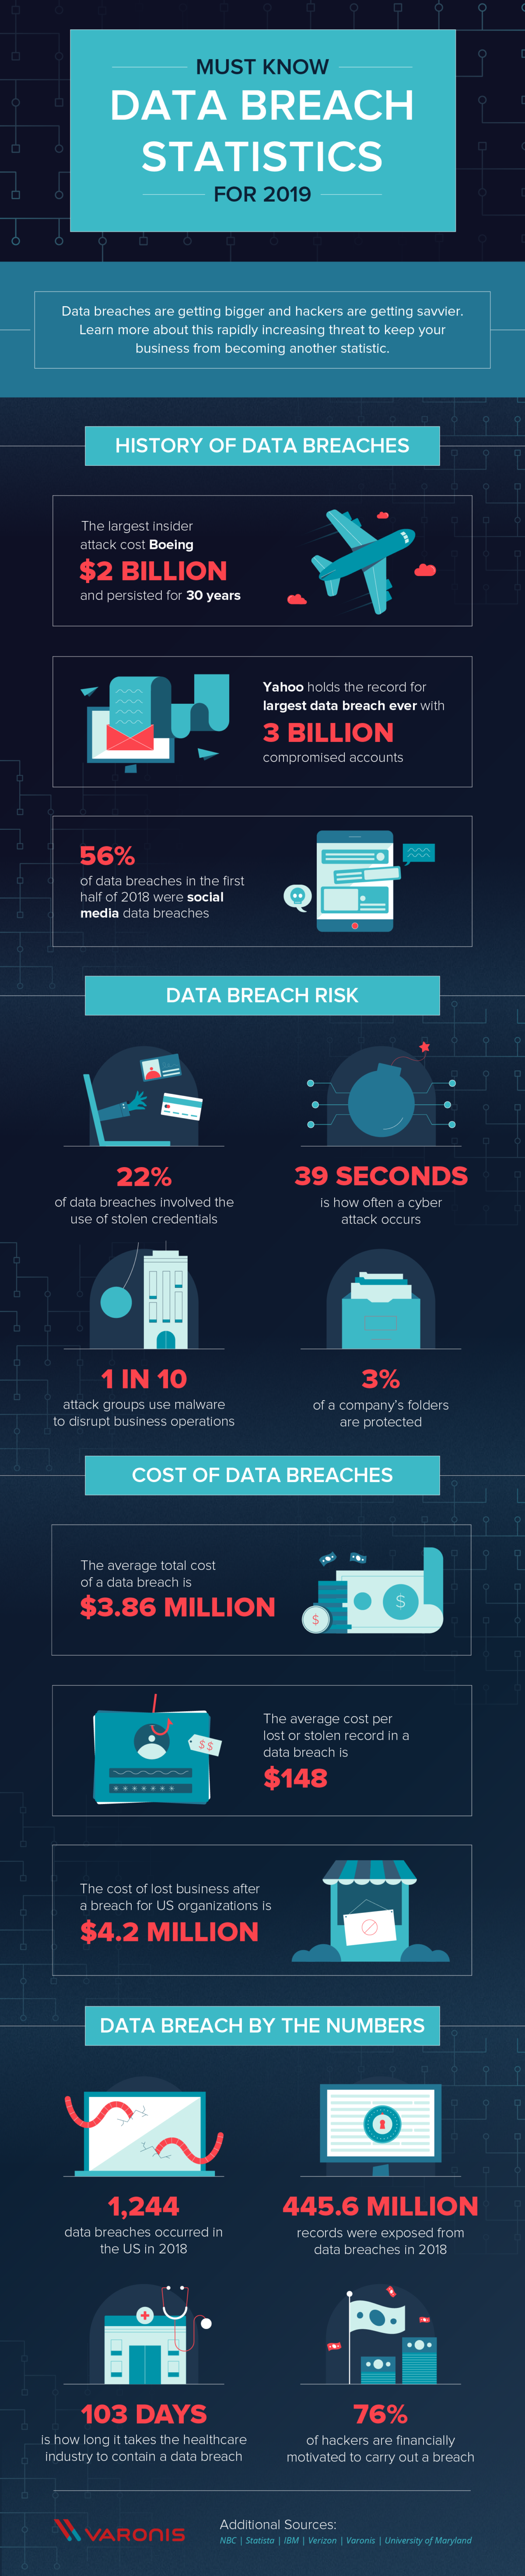 data-breach-statistics-2019_data-breach-statistics-1200x5889